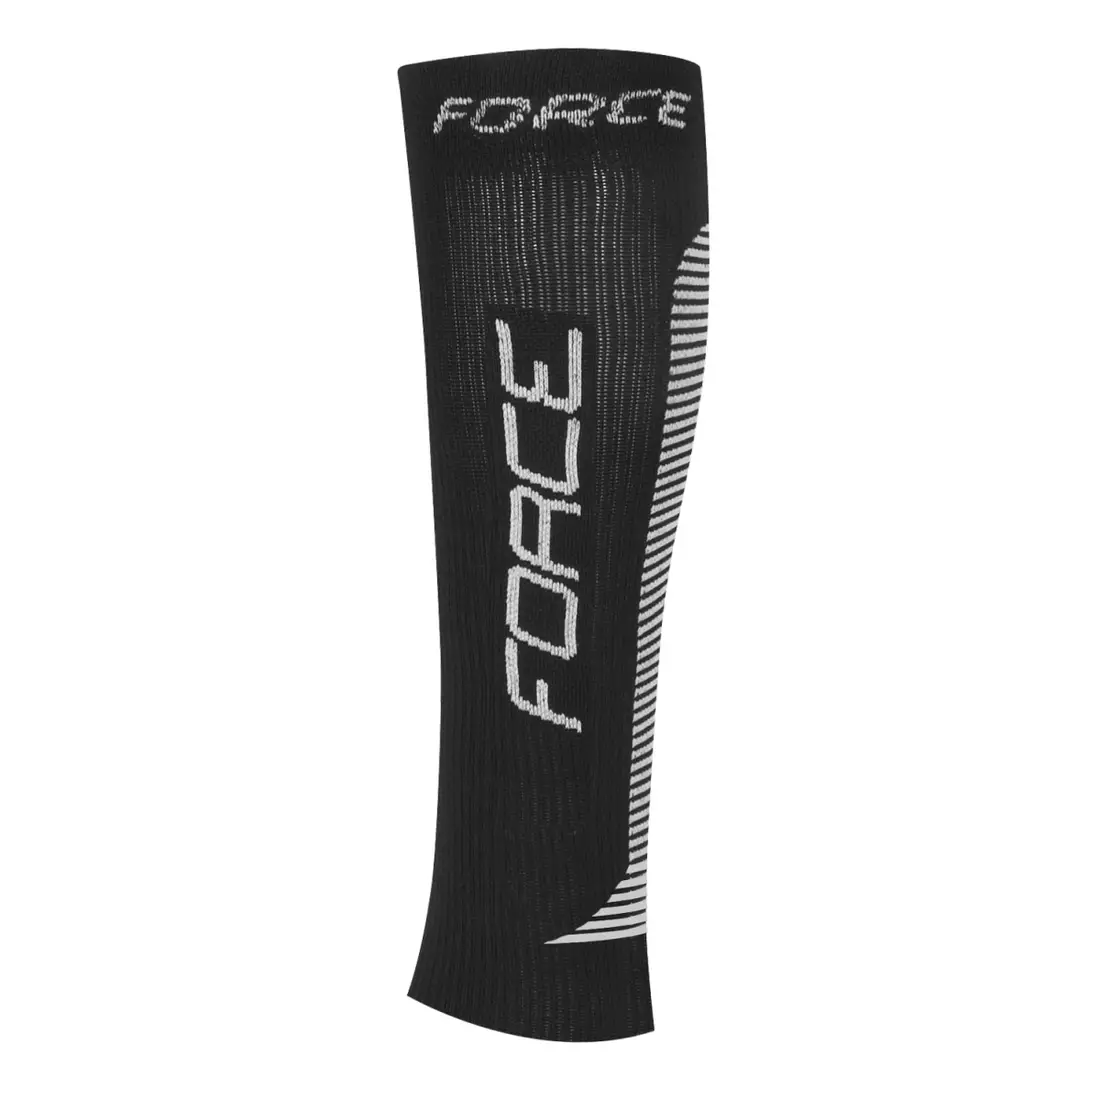 FORCE calf compression sleeves 901069/901070, color: Black